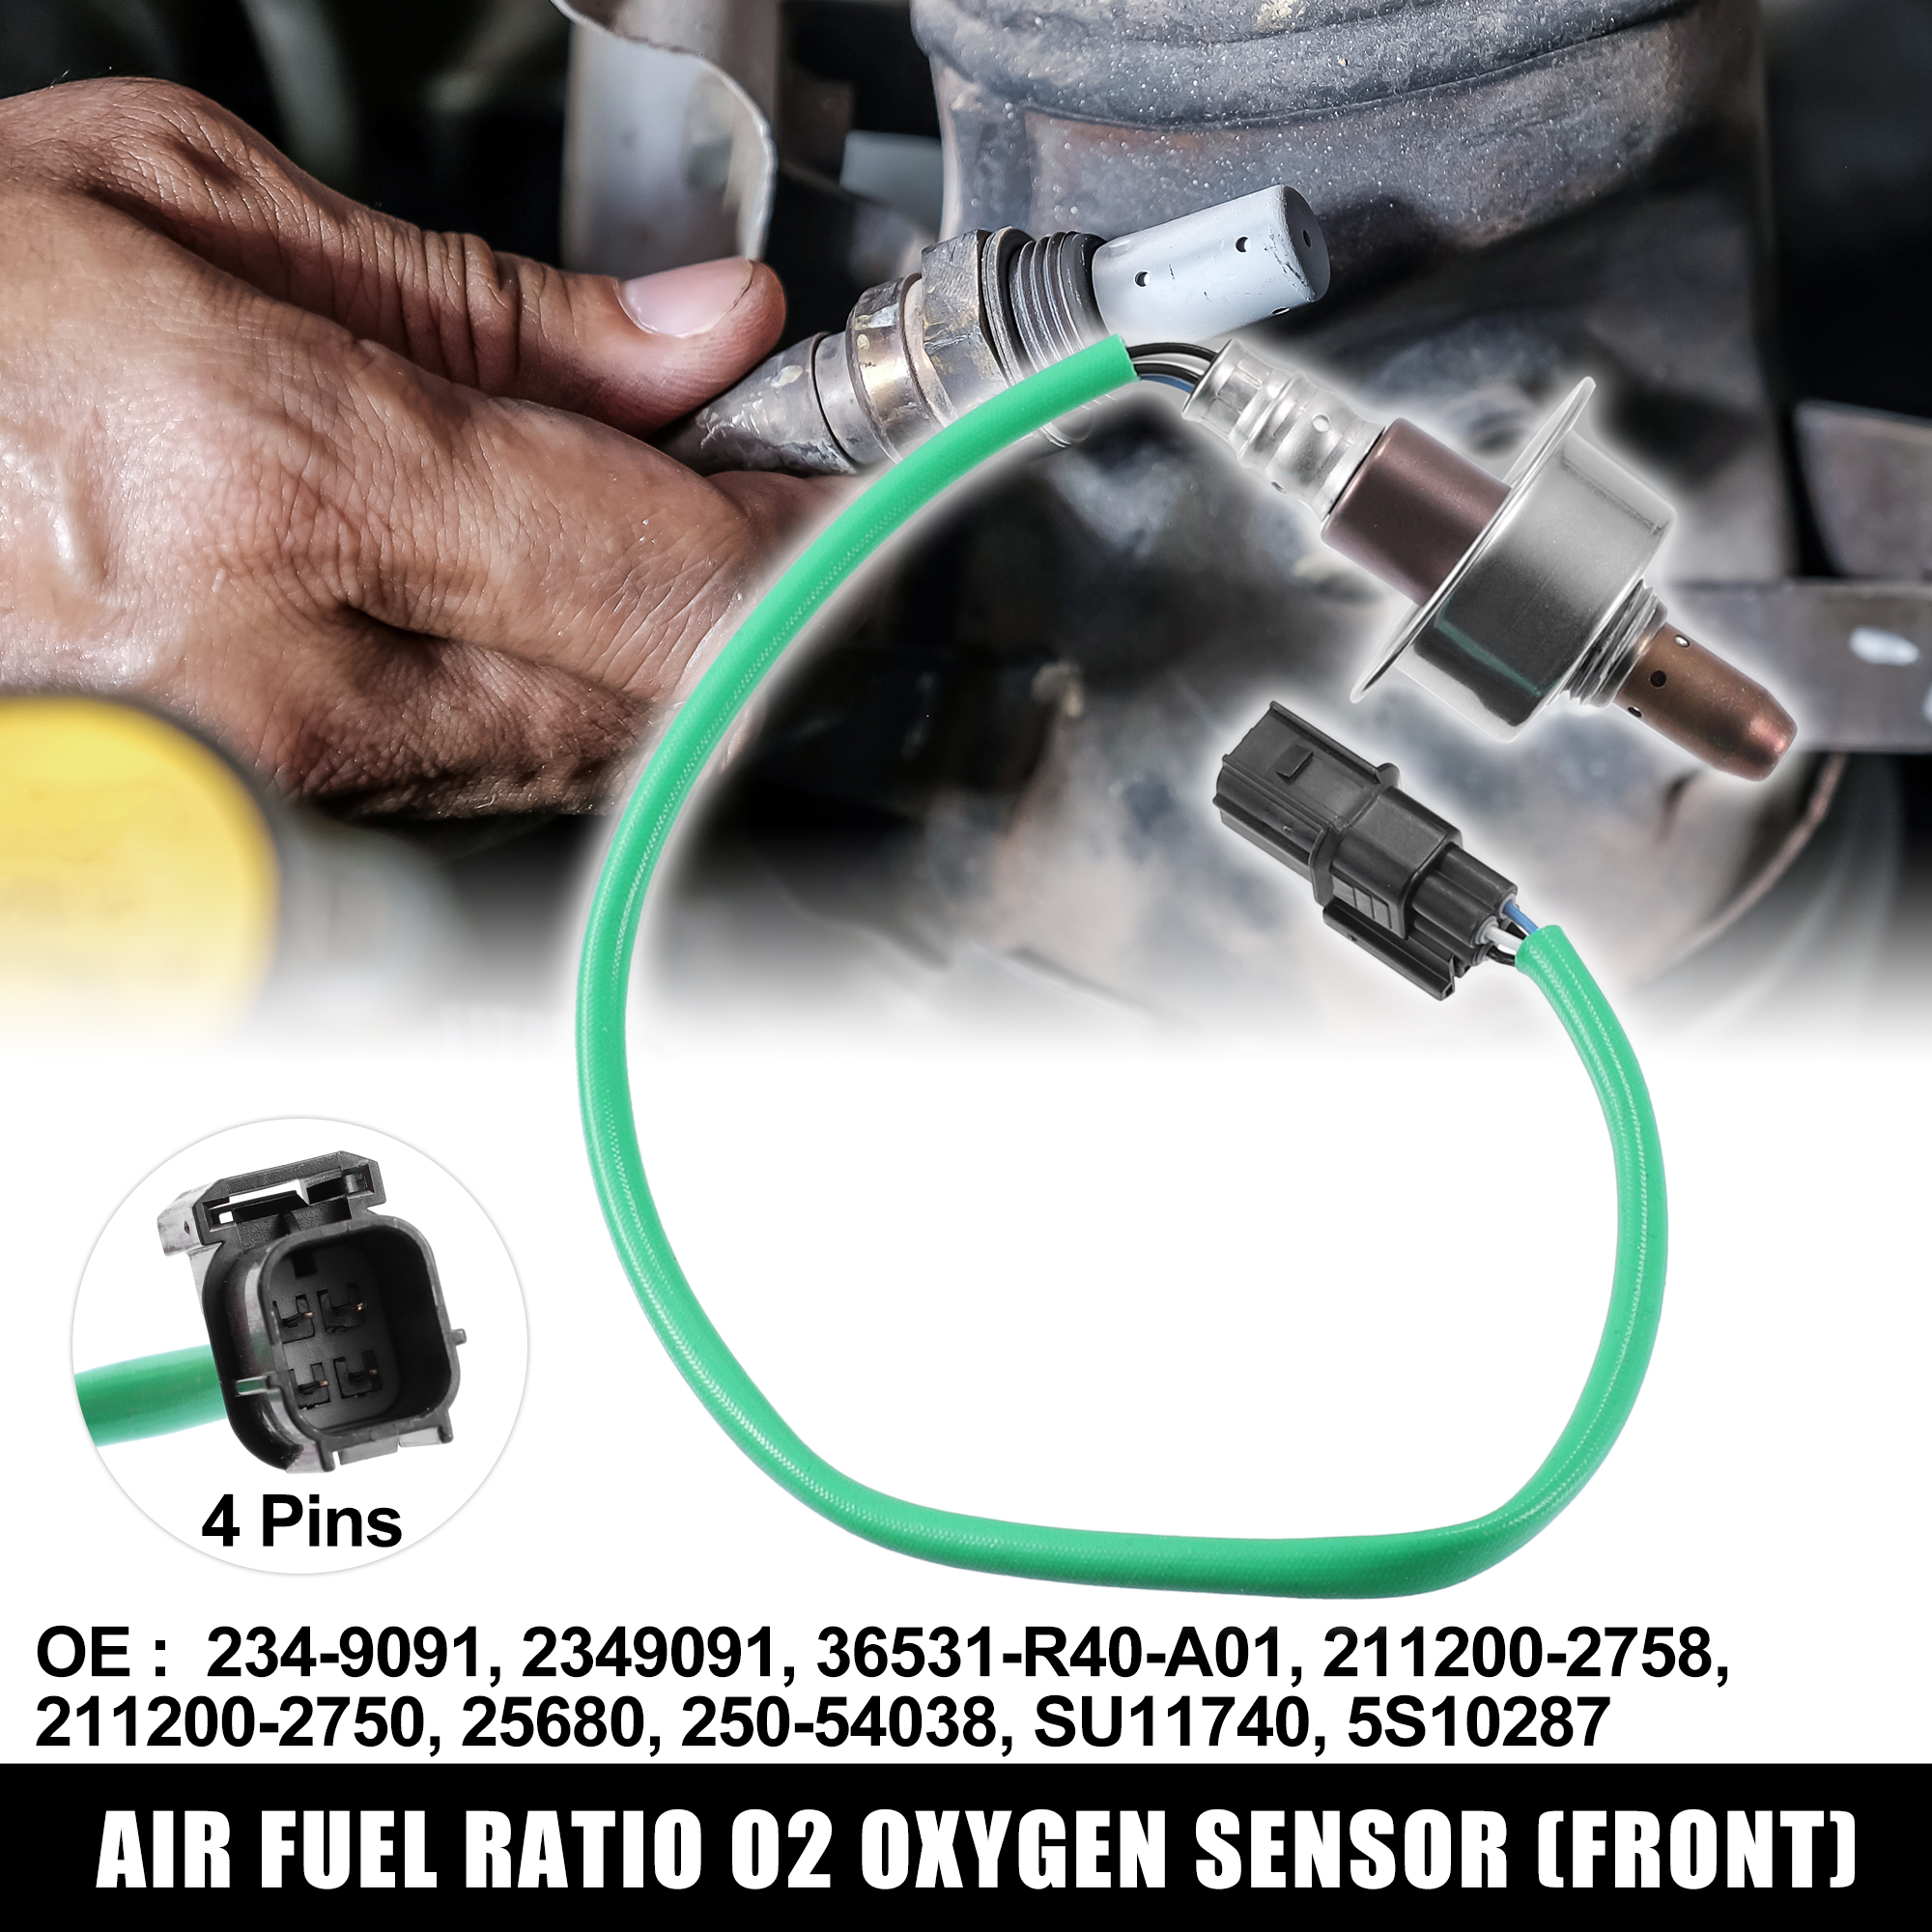 Unique Bargains 2349091 Air Fuel Ratio O2 Oxygen Sensor Replacement Front for Acura TSX